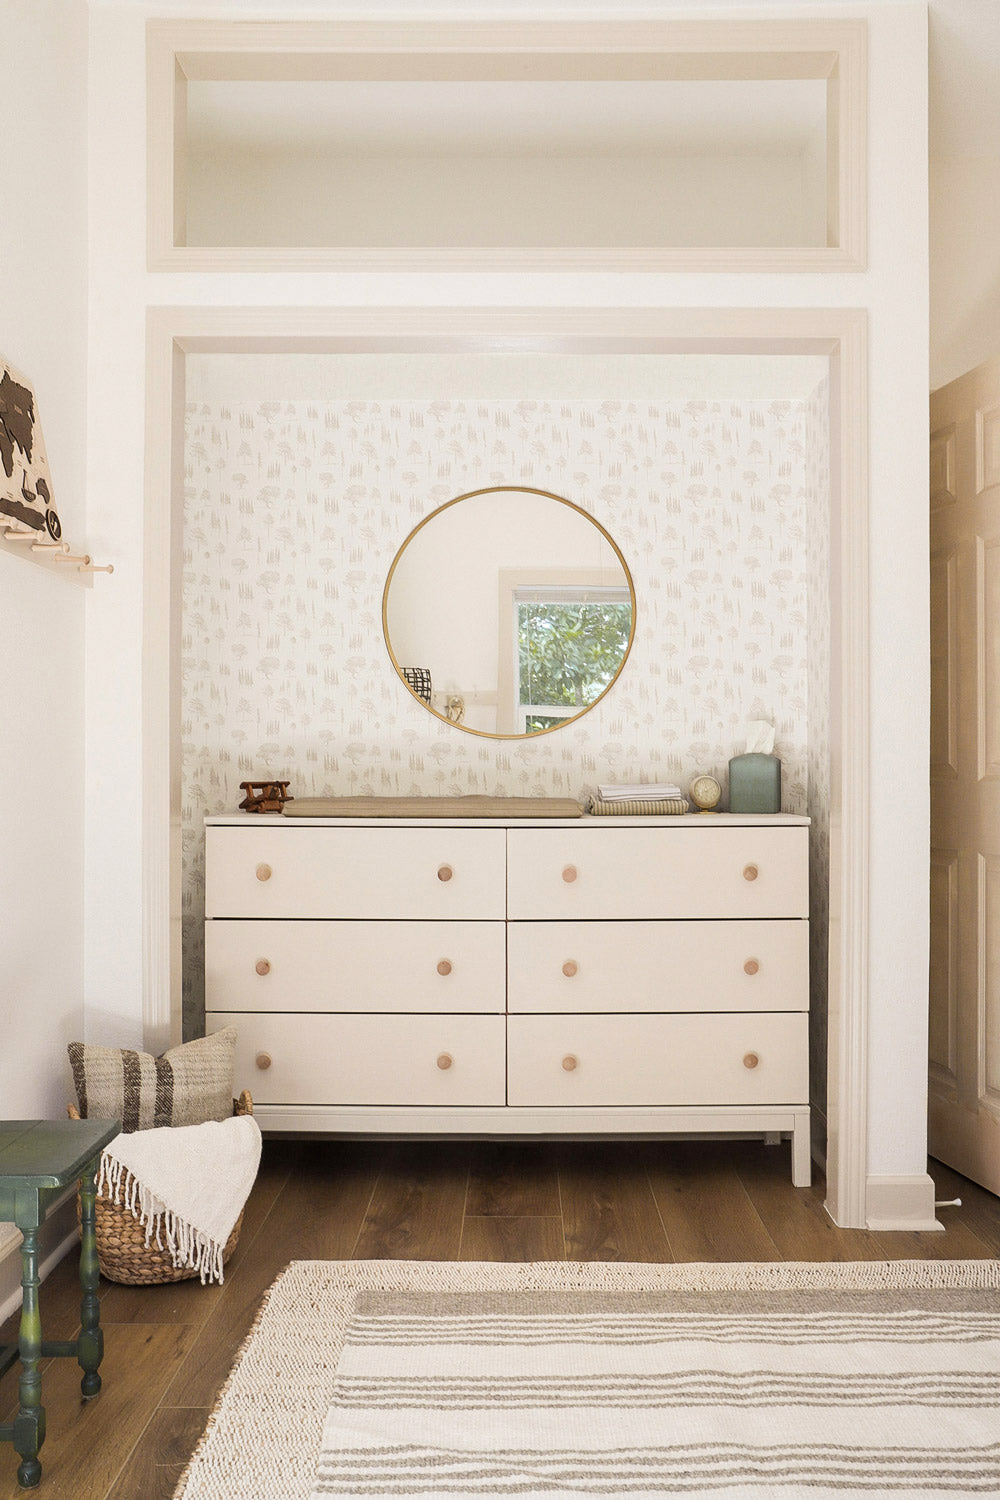 Custom removable wallpaper design for baby nursery interiors